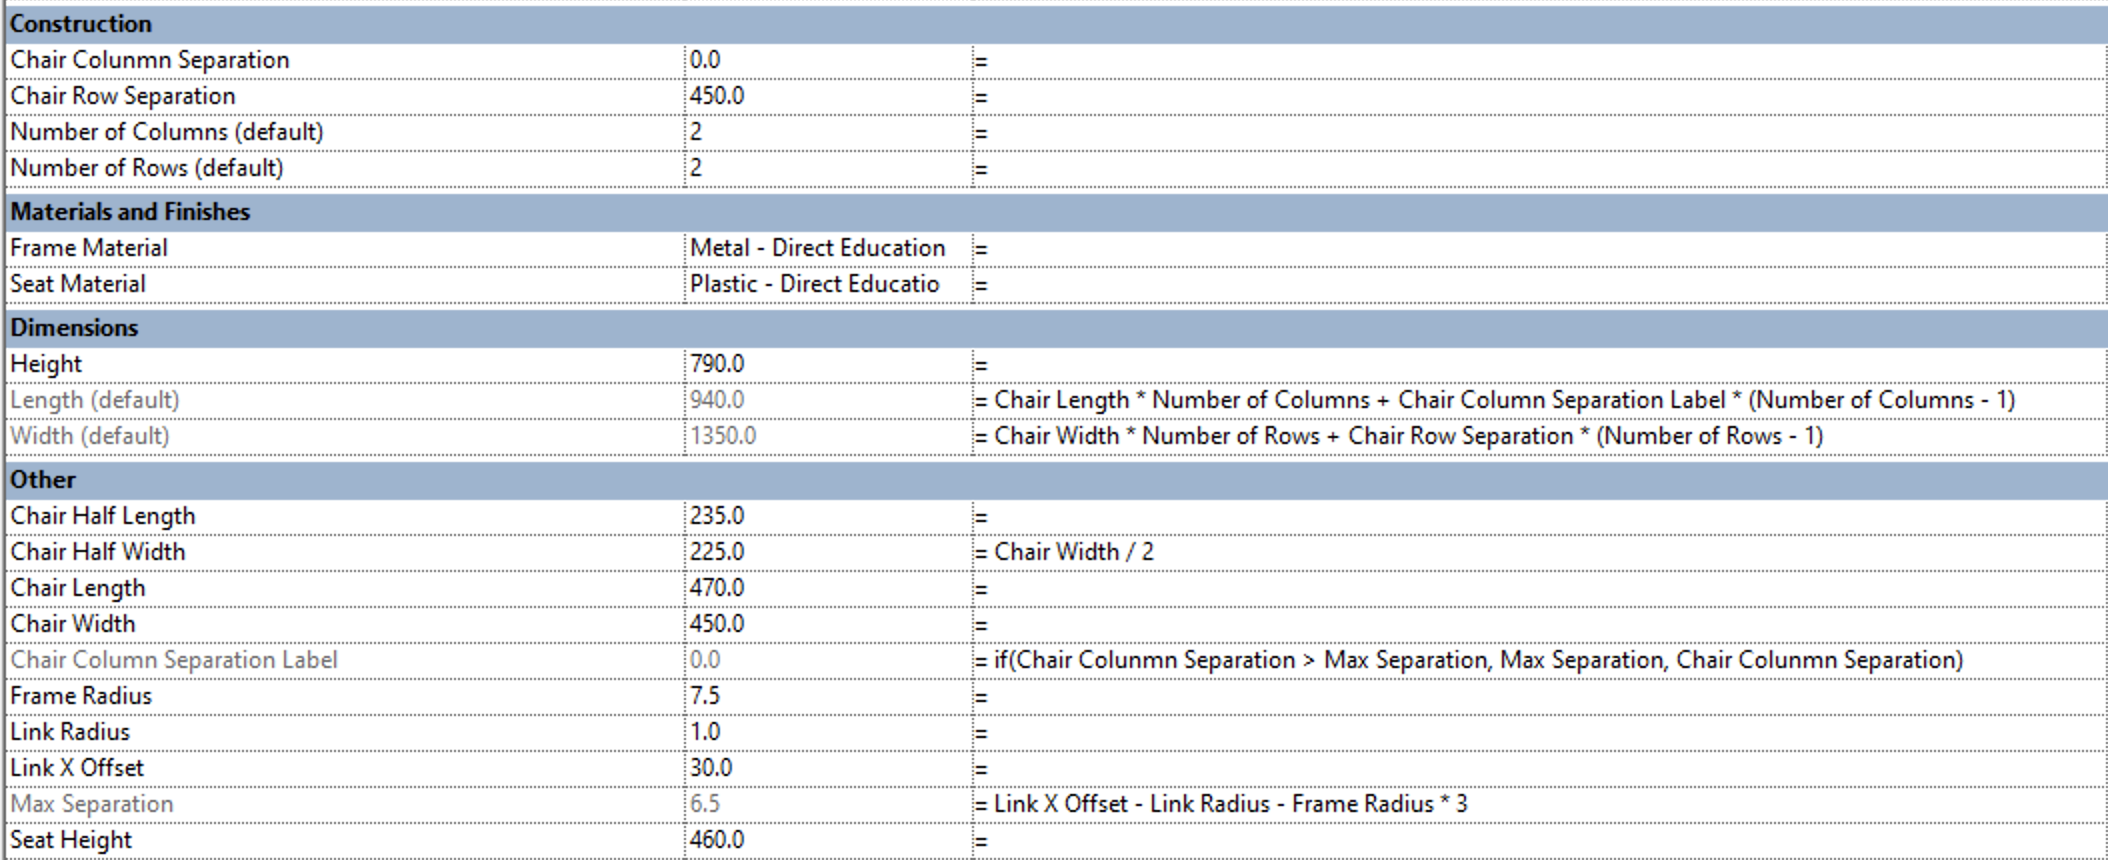 Chair array formulas driving parameters in Revit